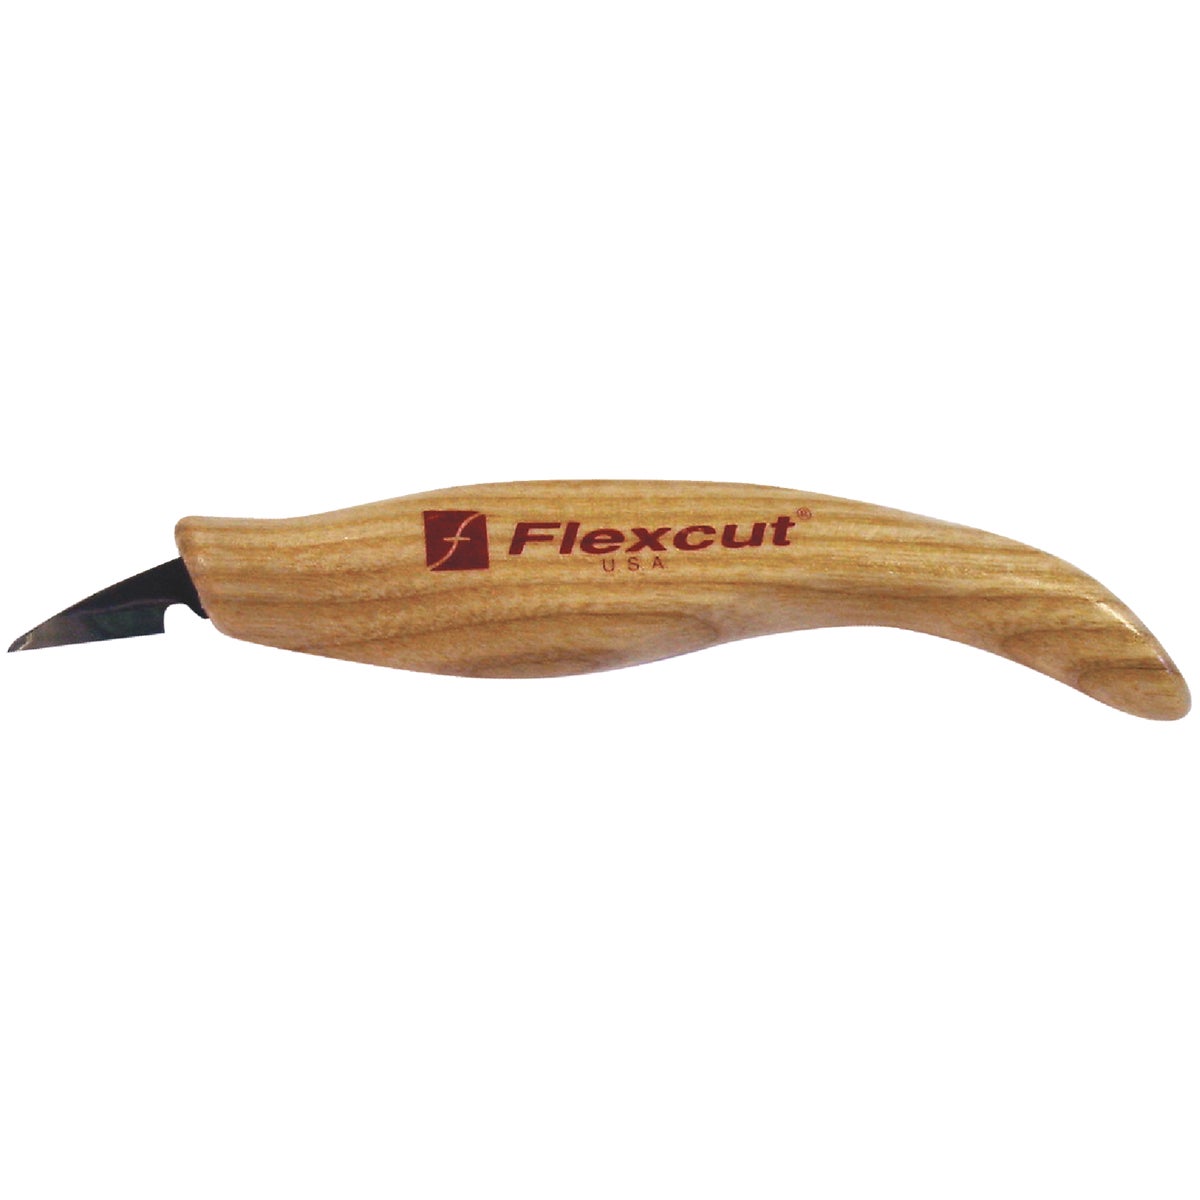 Flex Cut KN27 Flex Cut Mini-Detail Carving Knife with 3/4 In. Blade KN27